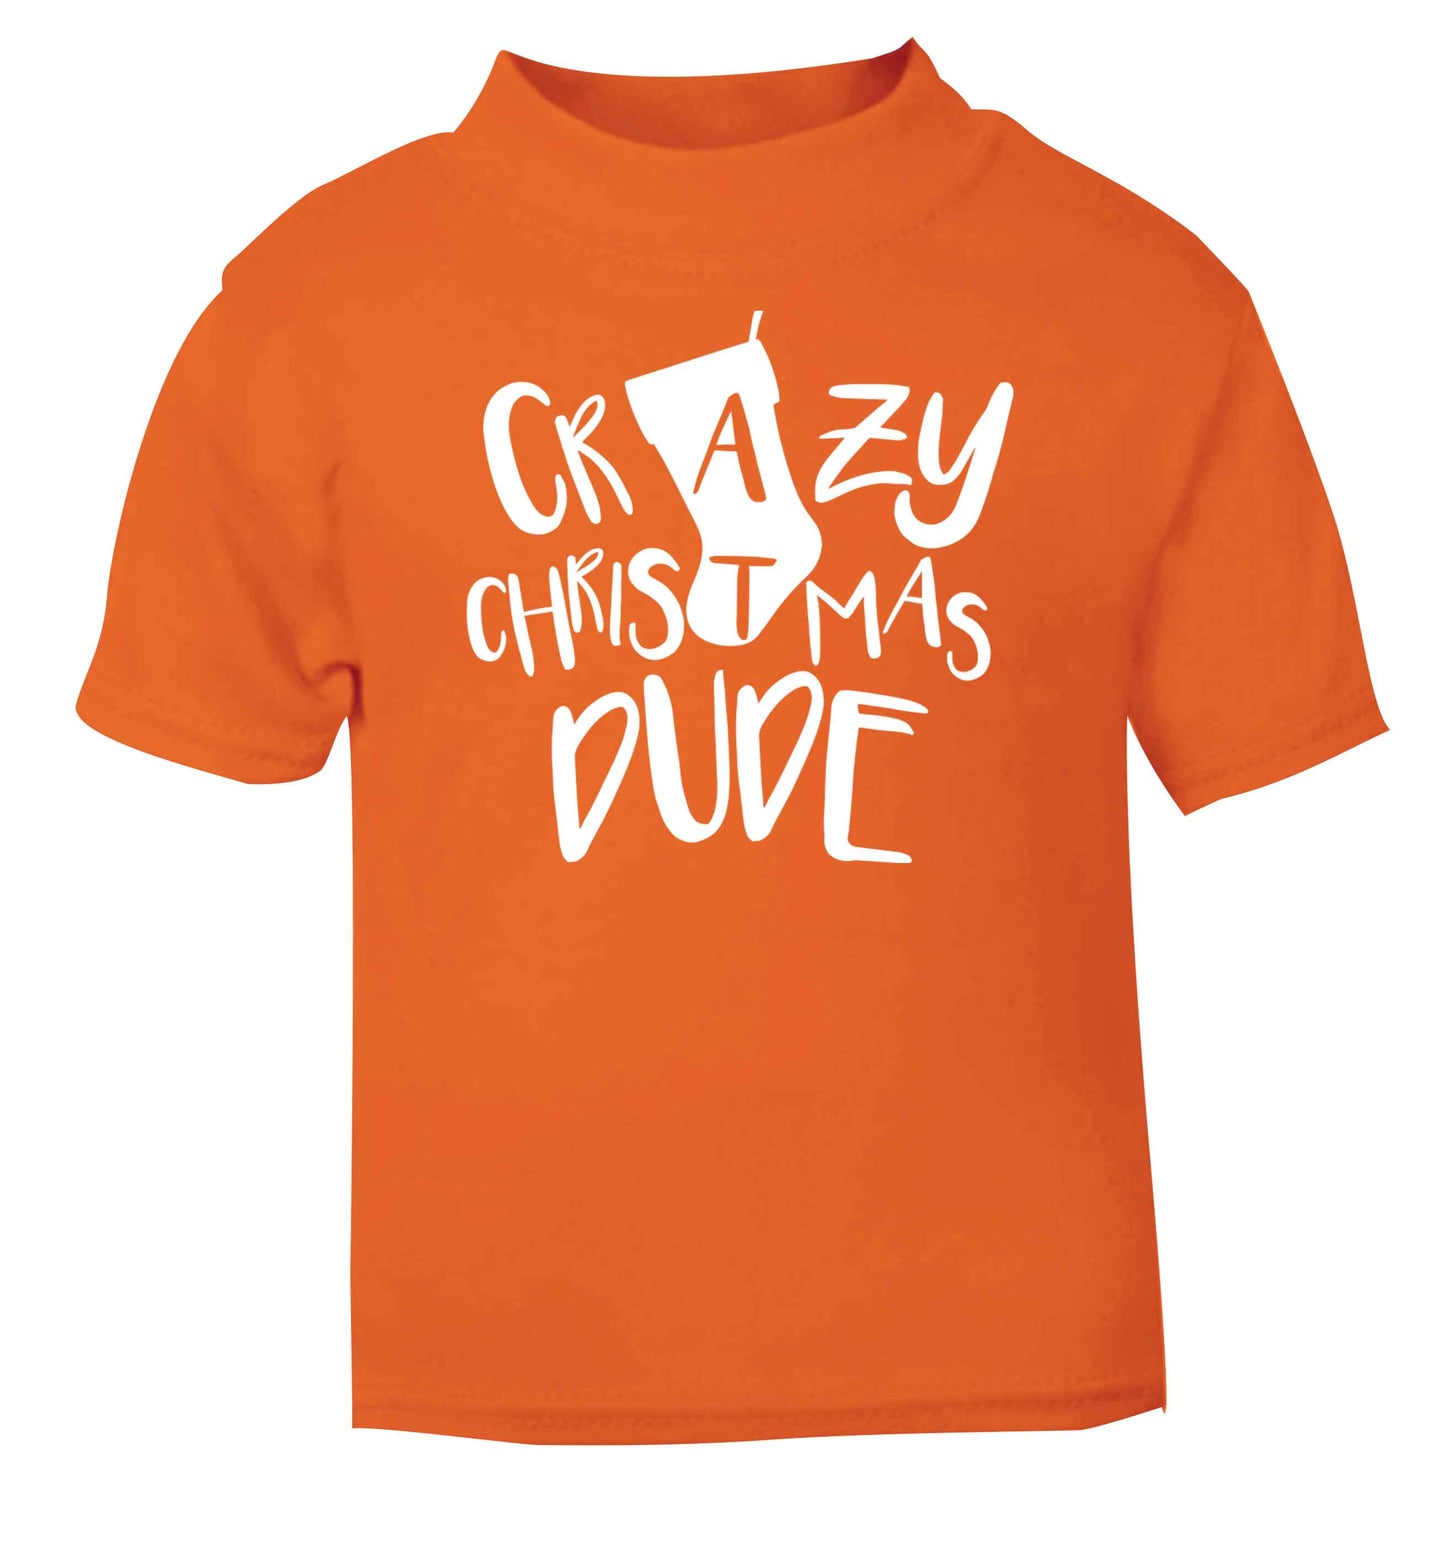 Crazy Christmas Dude orange baby toddler Tshirt 2 Years